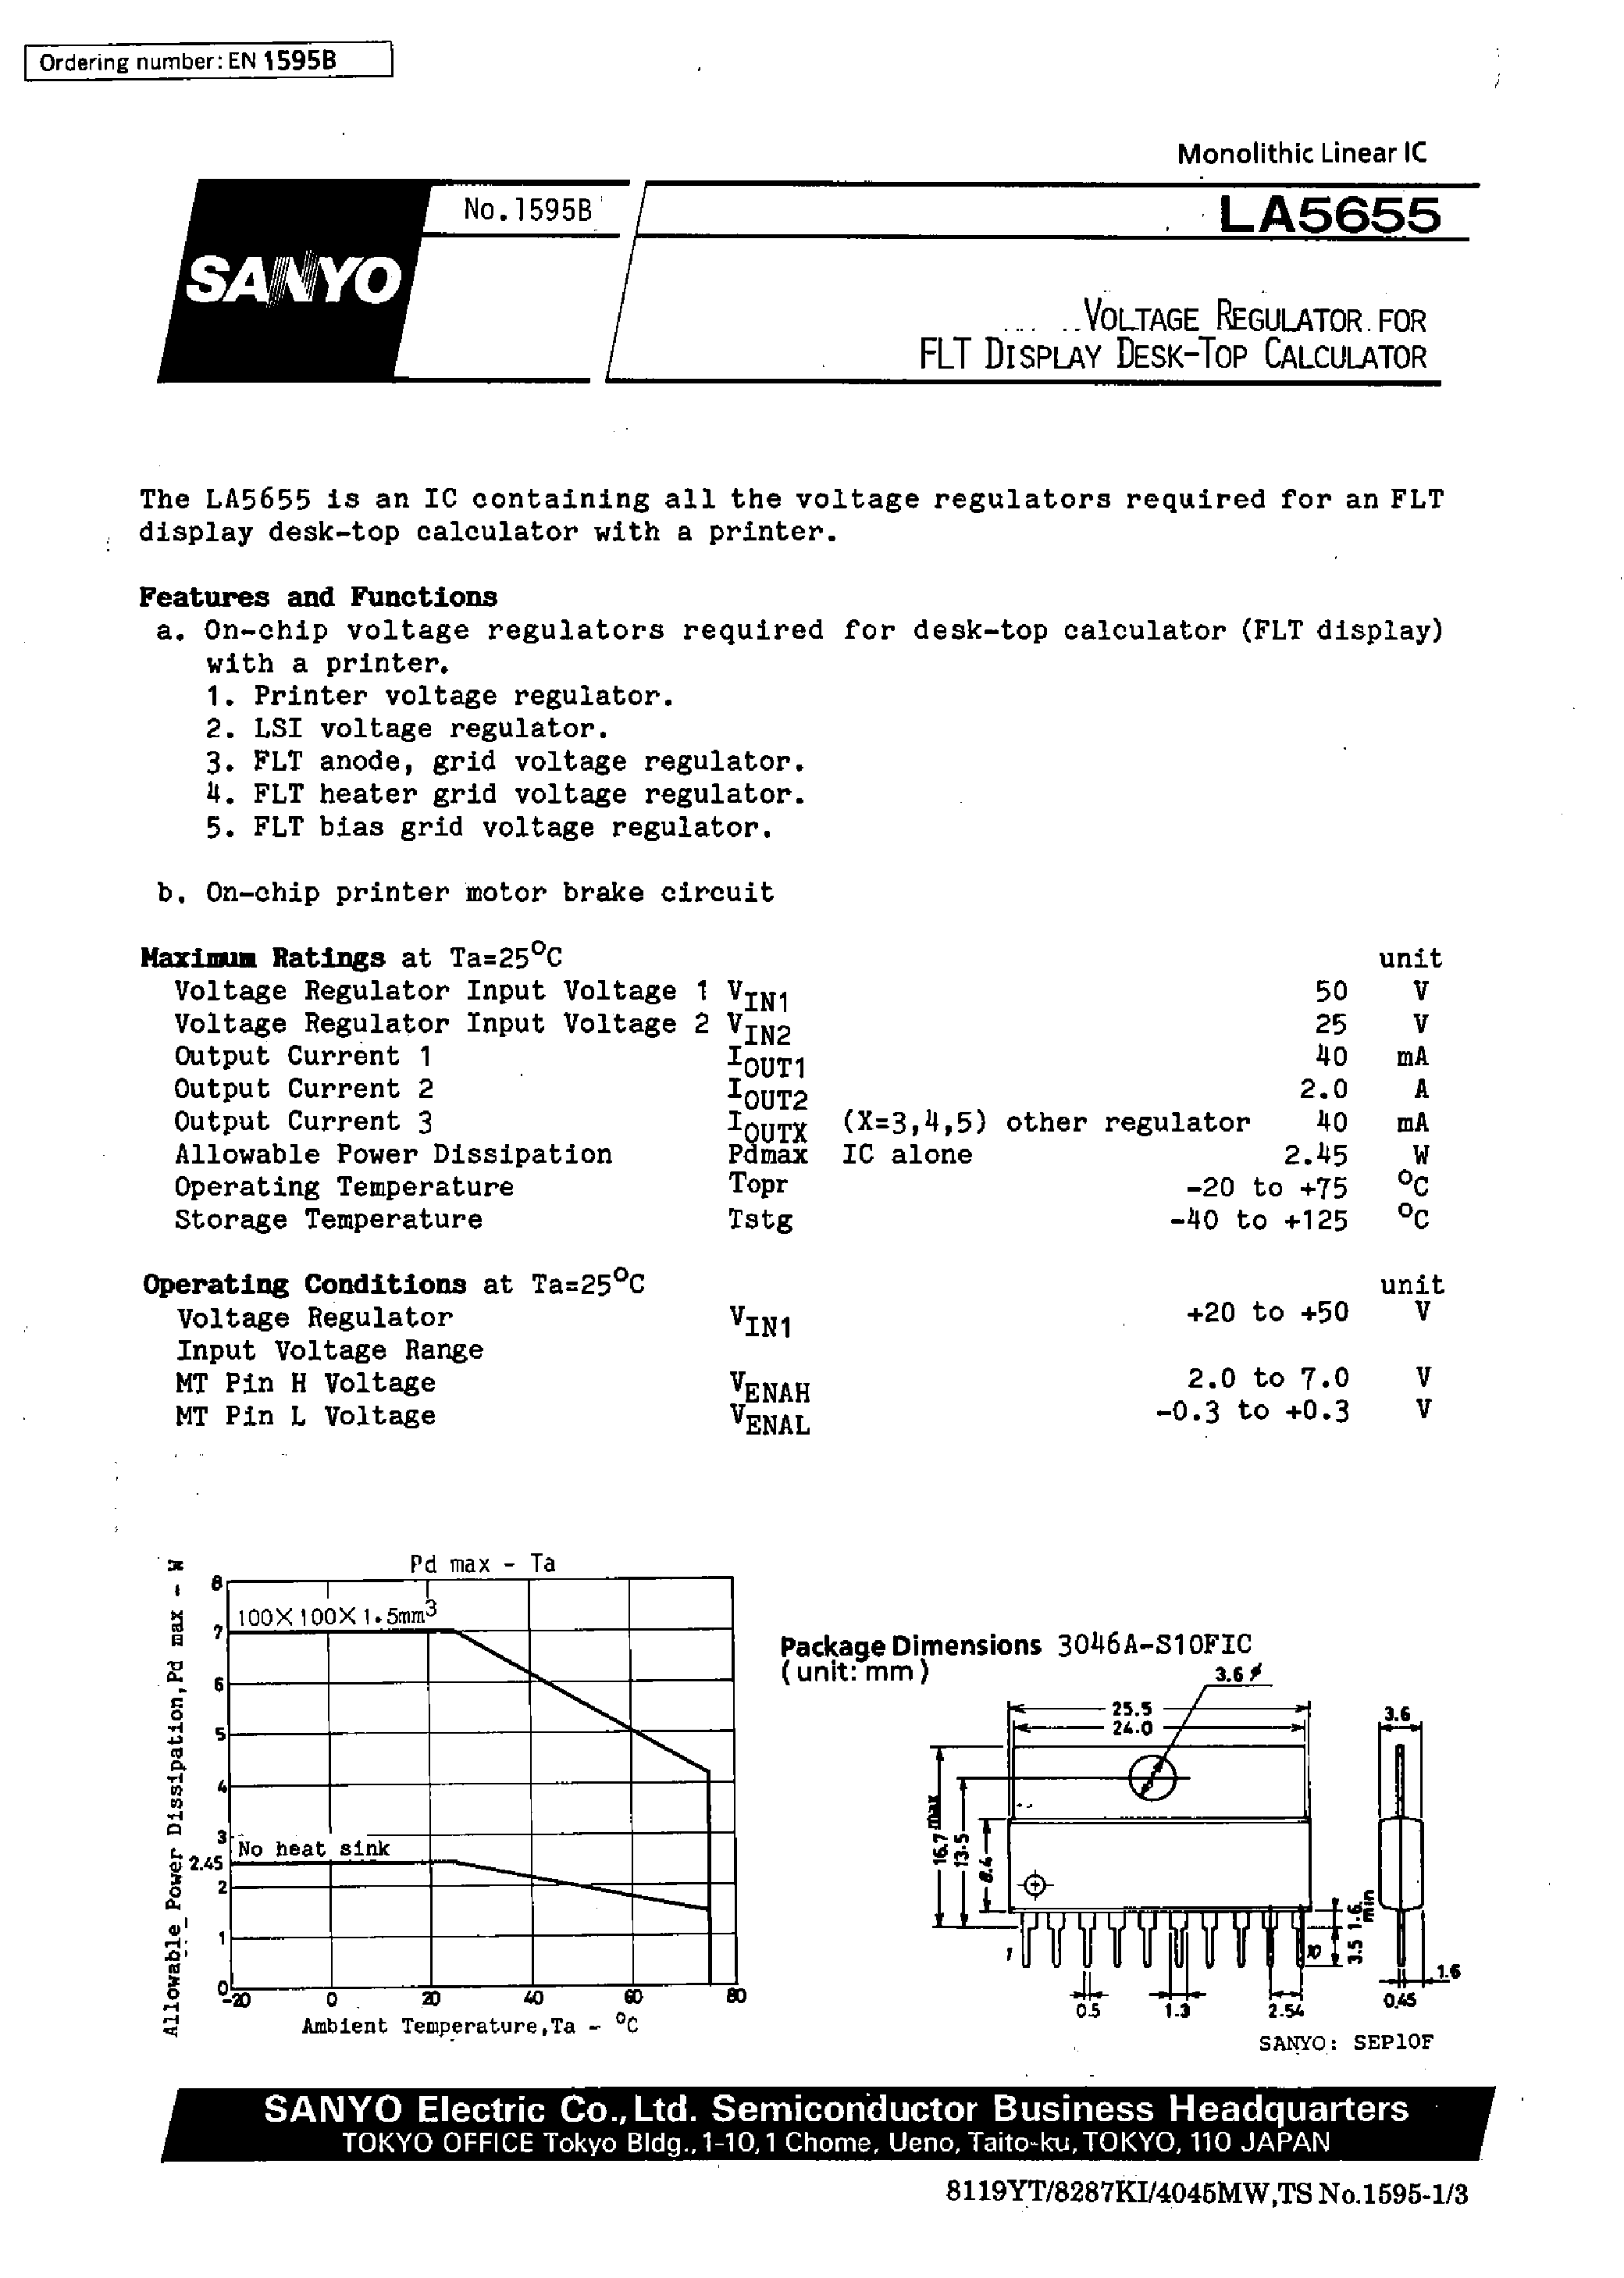 Datasheet LA5655 - Voltage Regulator for FLY Display Desk-Top Calculator page 1